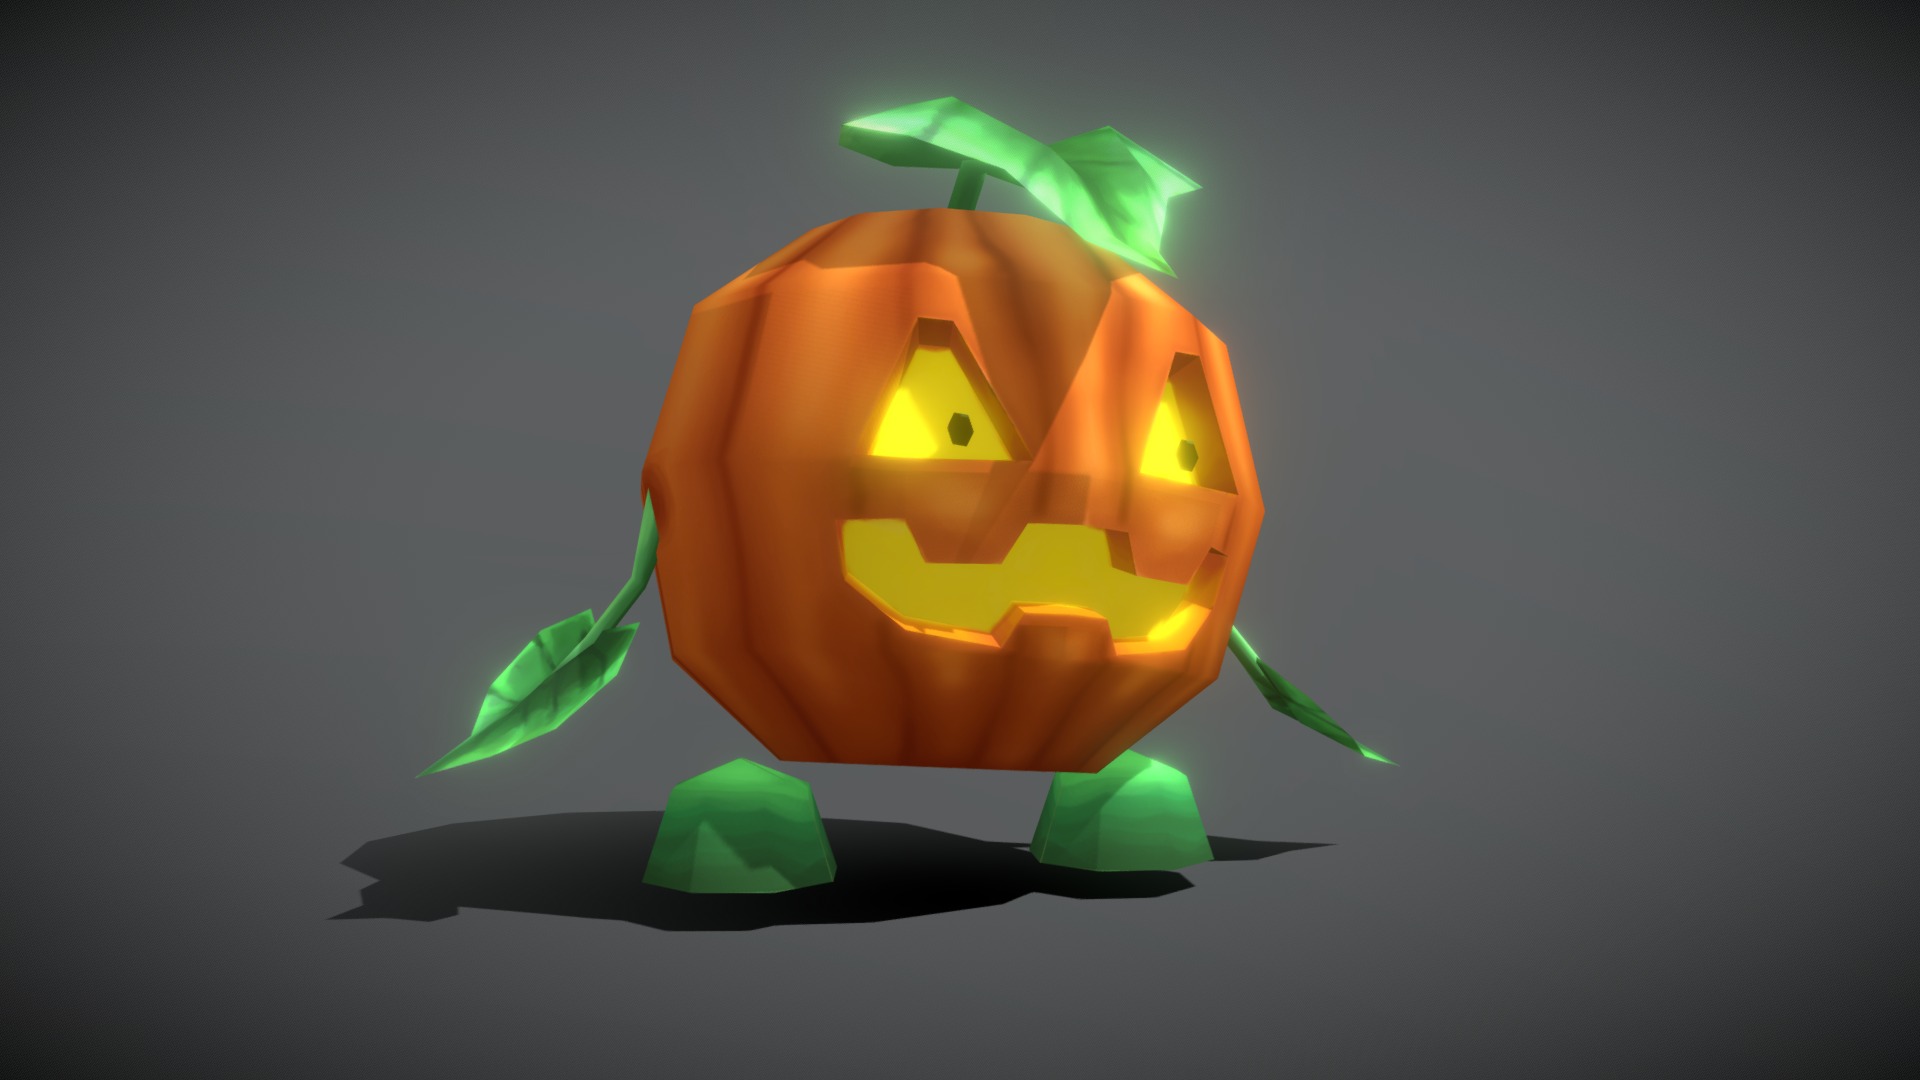 3D model 3DRT – Chibimons – Pumpkin - This is a 3D model of the 3DRT - Chibimons - Pumpkin. The 3D model is about a carved pumpkin with a face.